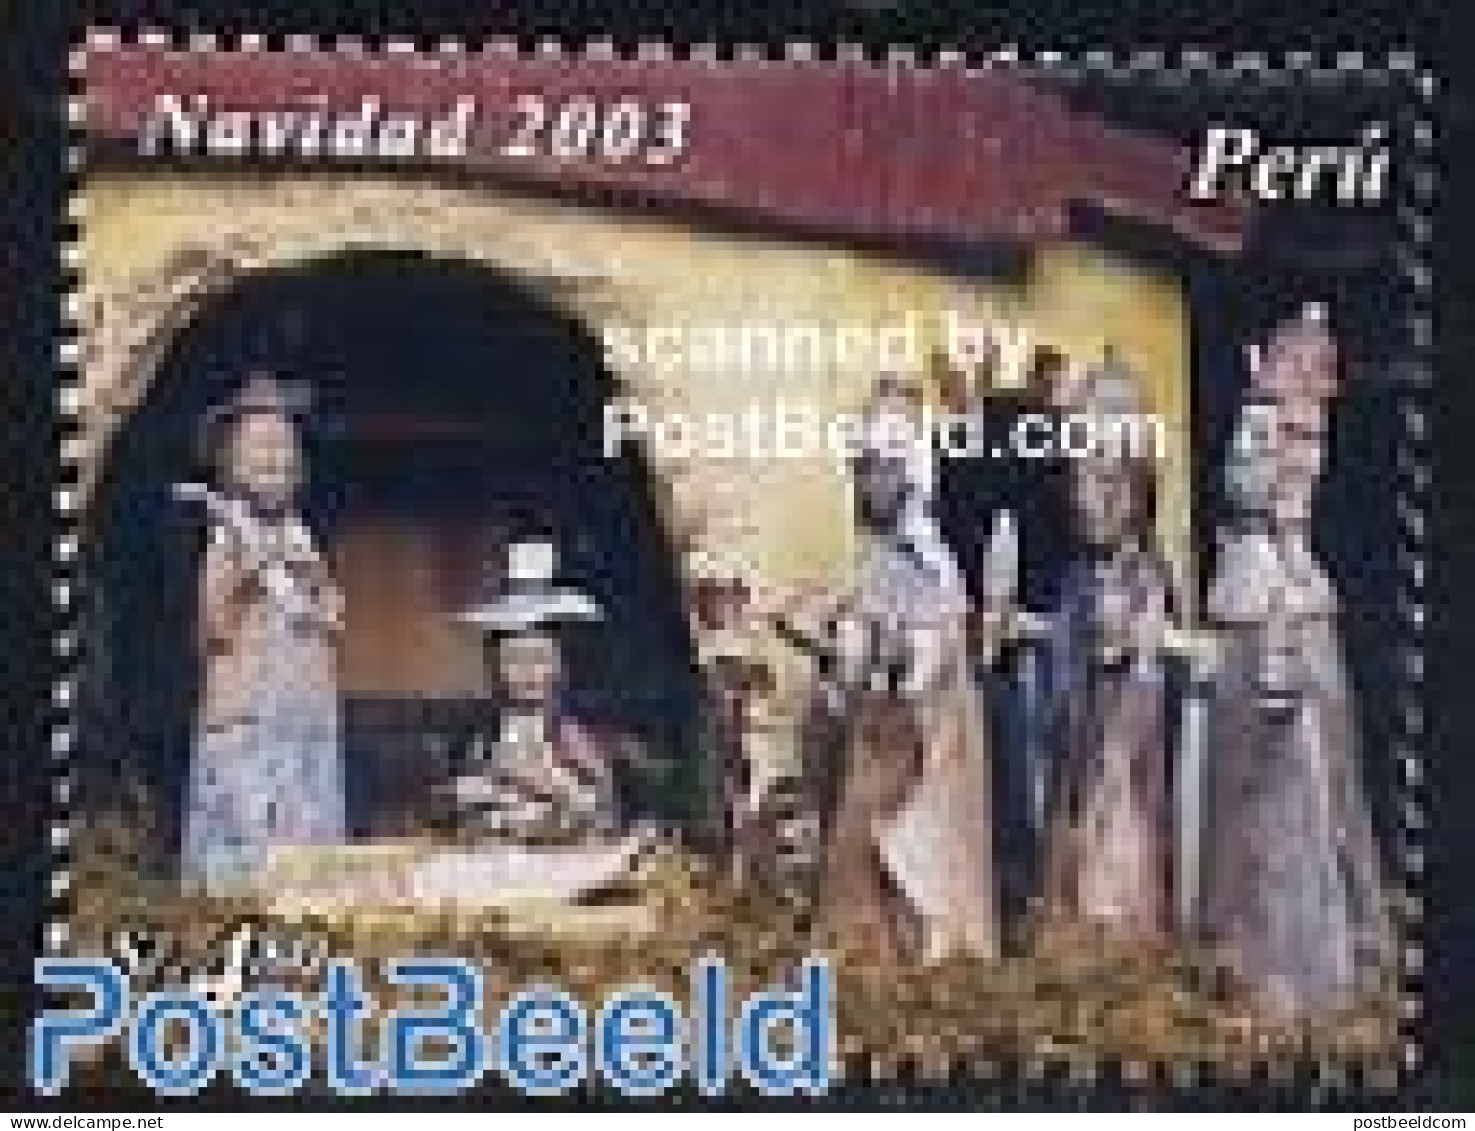 Peru 2003 Christmas 1v, Mint NH, Religion - Christmas - Weihnachten